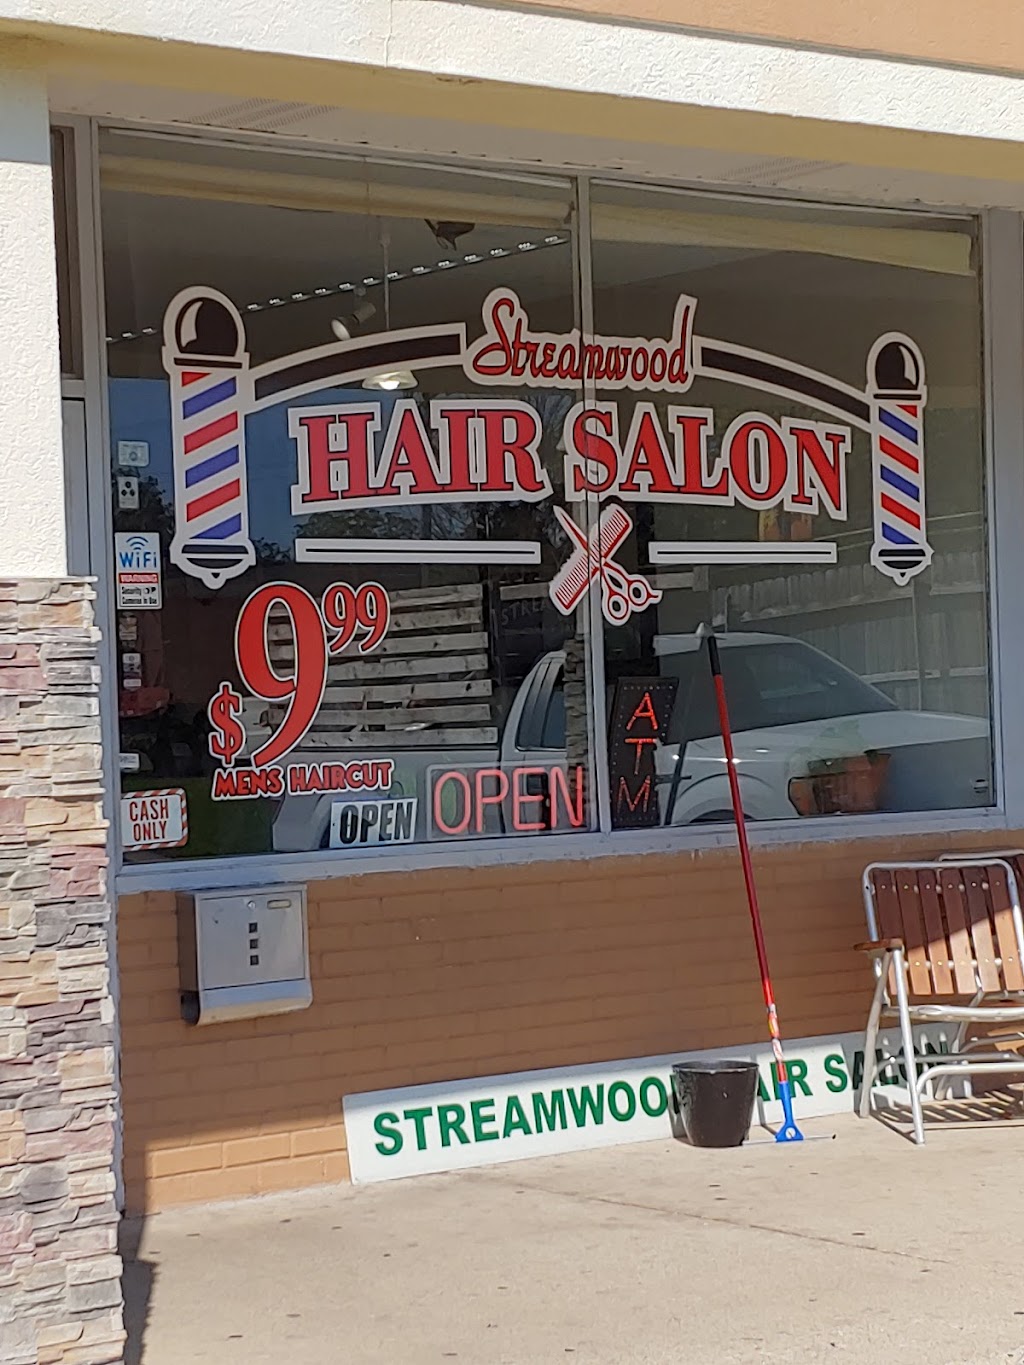 Streamwood Hair Salon | Hillside Shopping Center, 14 W Streamwood Blvd, Streamwood, IL 60107 | Phone: (630) 550-4090